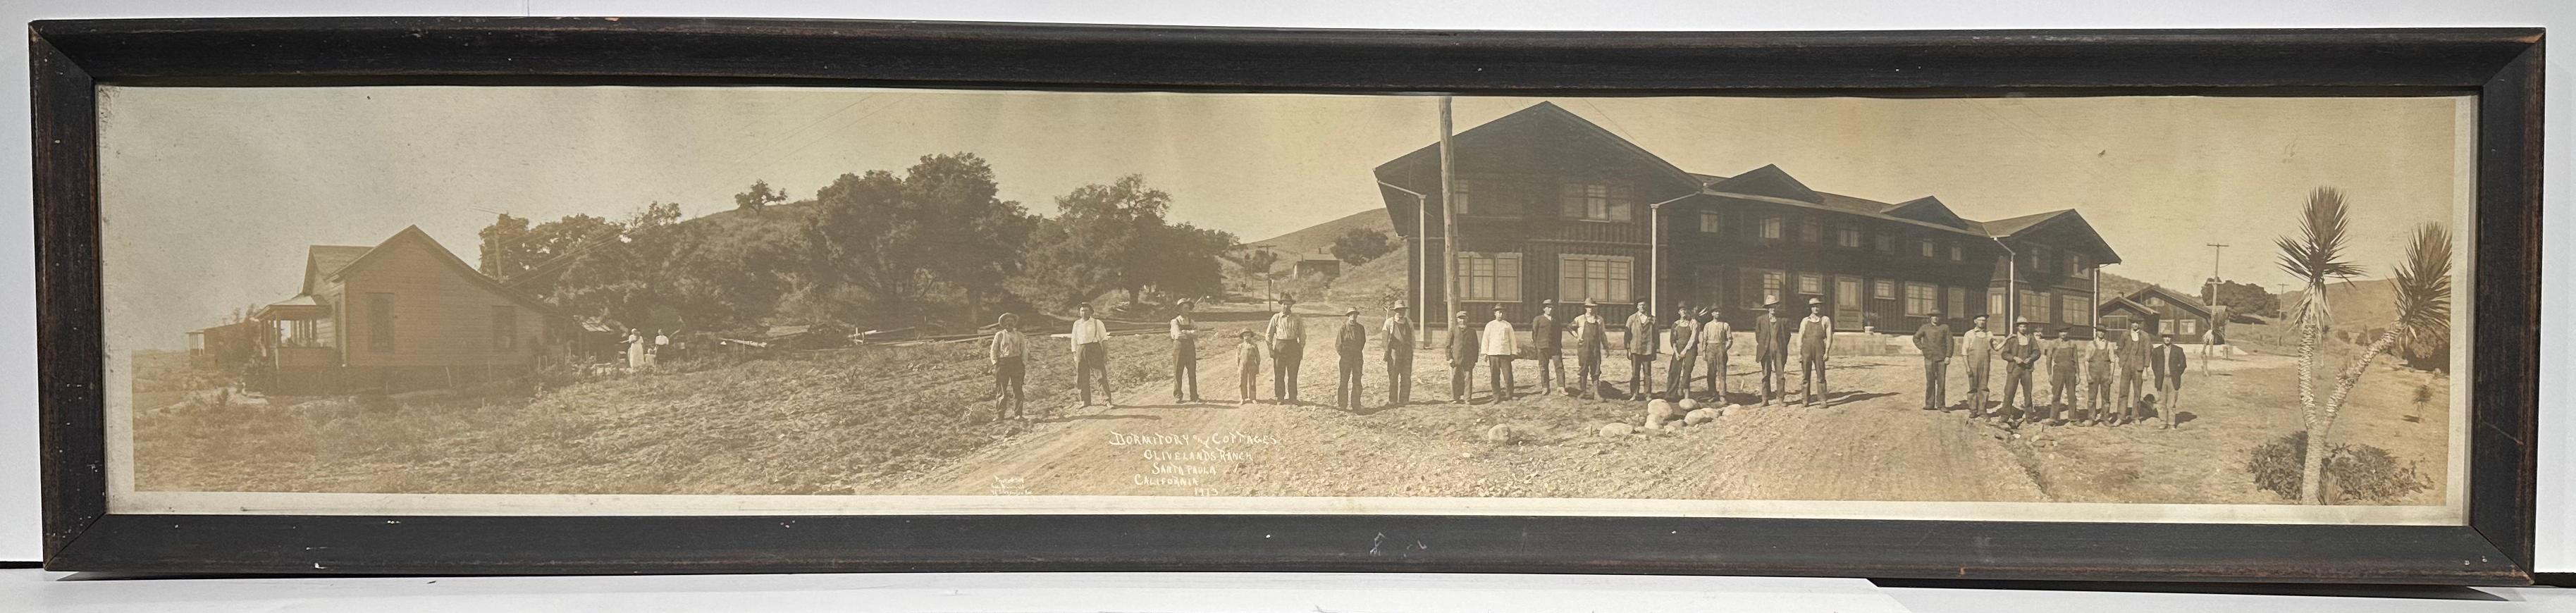 Schuyler U. Bunnell Black and White Photograph - Olivelands Limoneira Ranch 1913 Antique Photograph Santa Paula CA